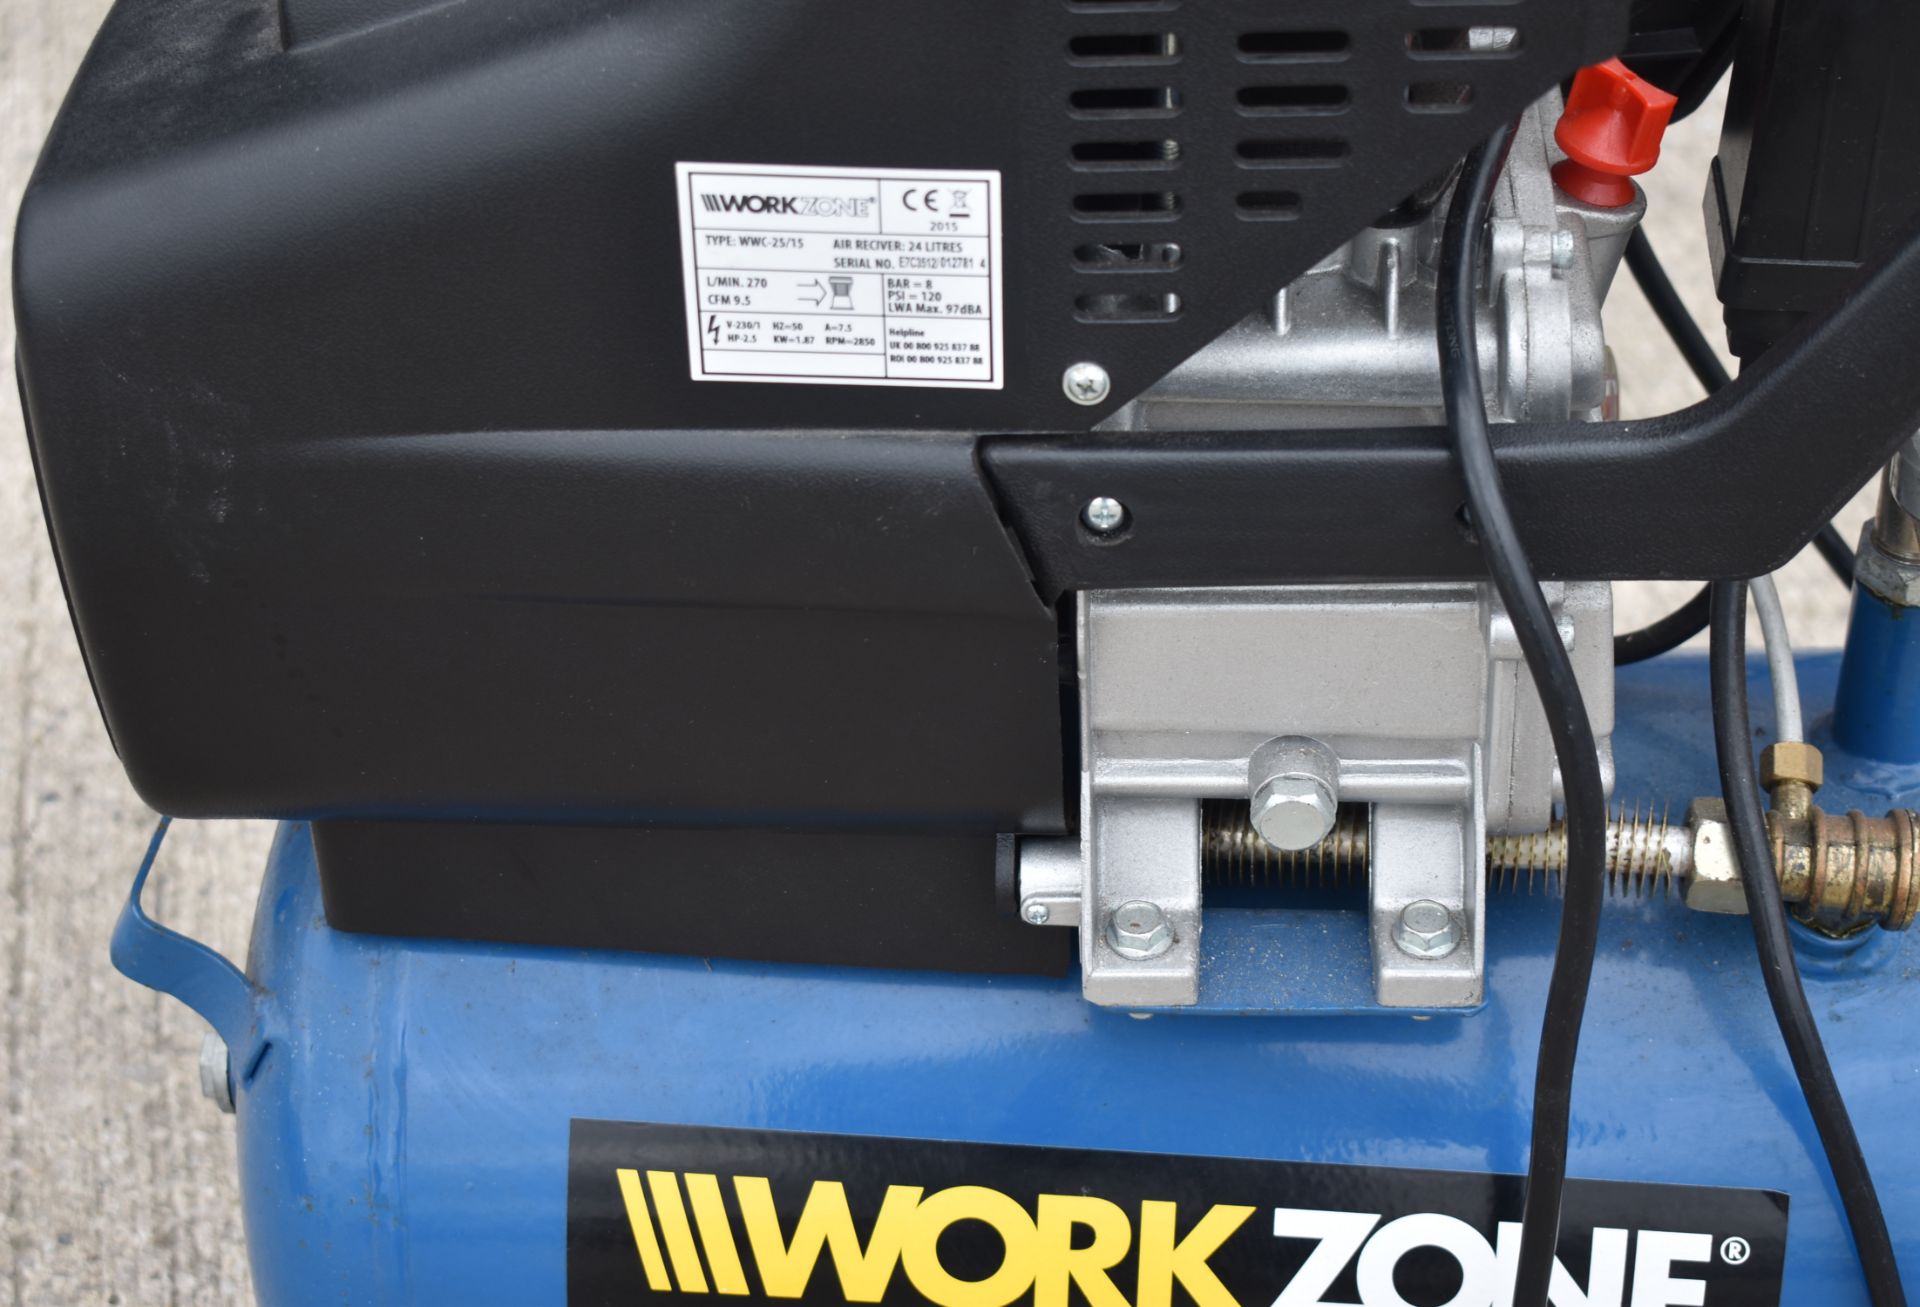 1 x WORKZONE Wwc 25/15 Air Compressor - 24L Receiver, 2.5Hp - RRP £190 - Ref: K260 - CL905 - Locatio - Image 4 of 14